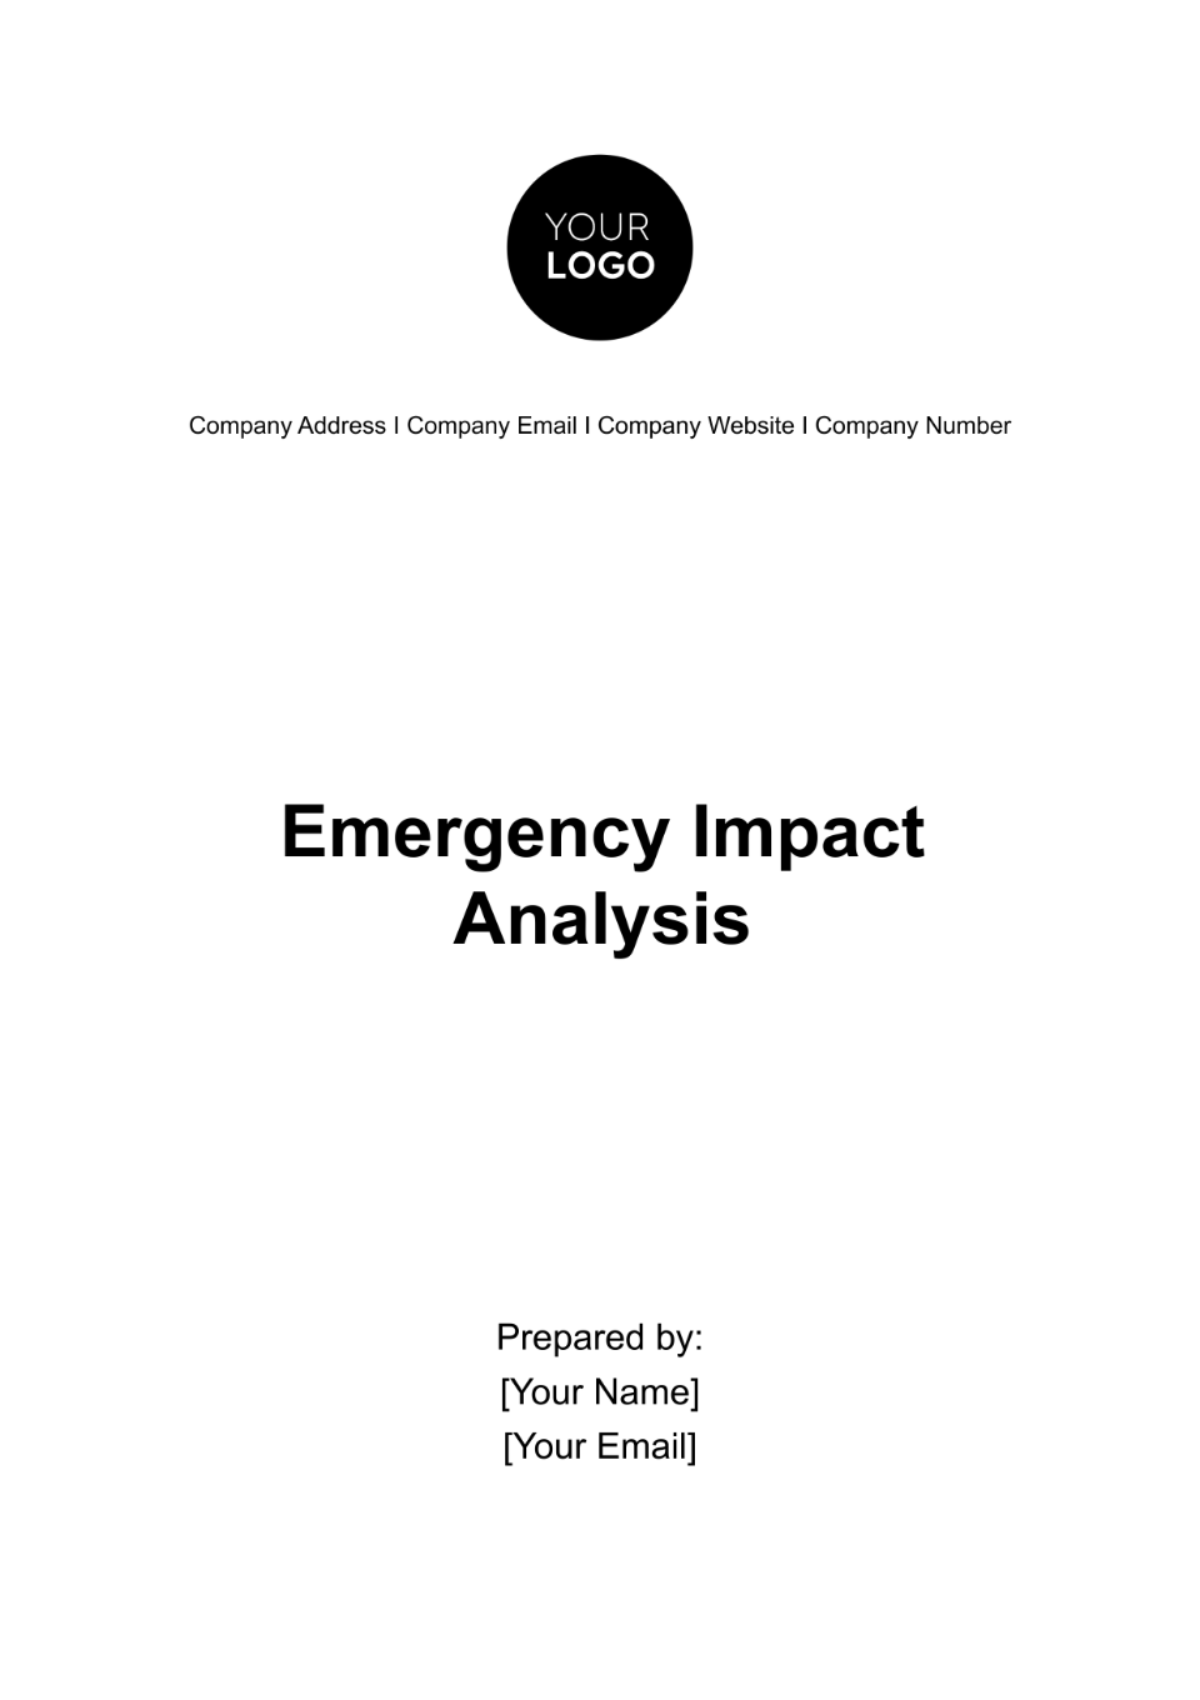 Emergency Impact Analysis Template